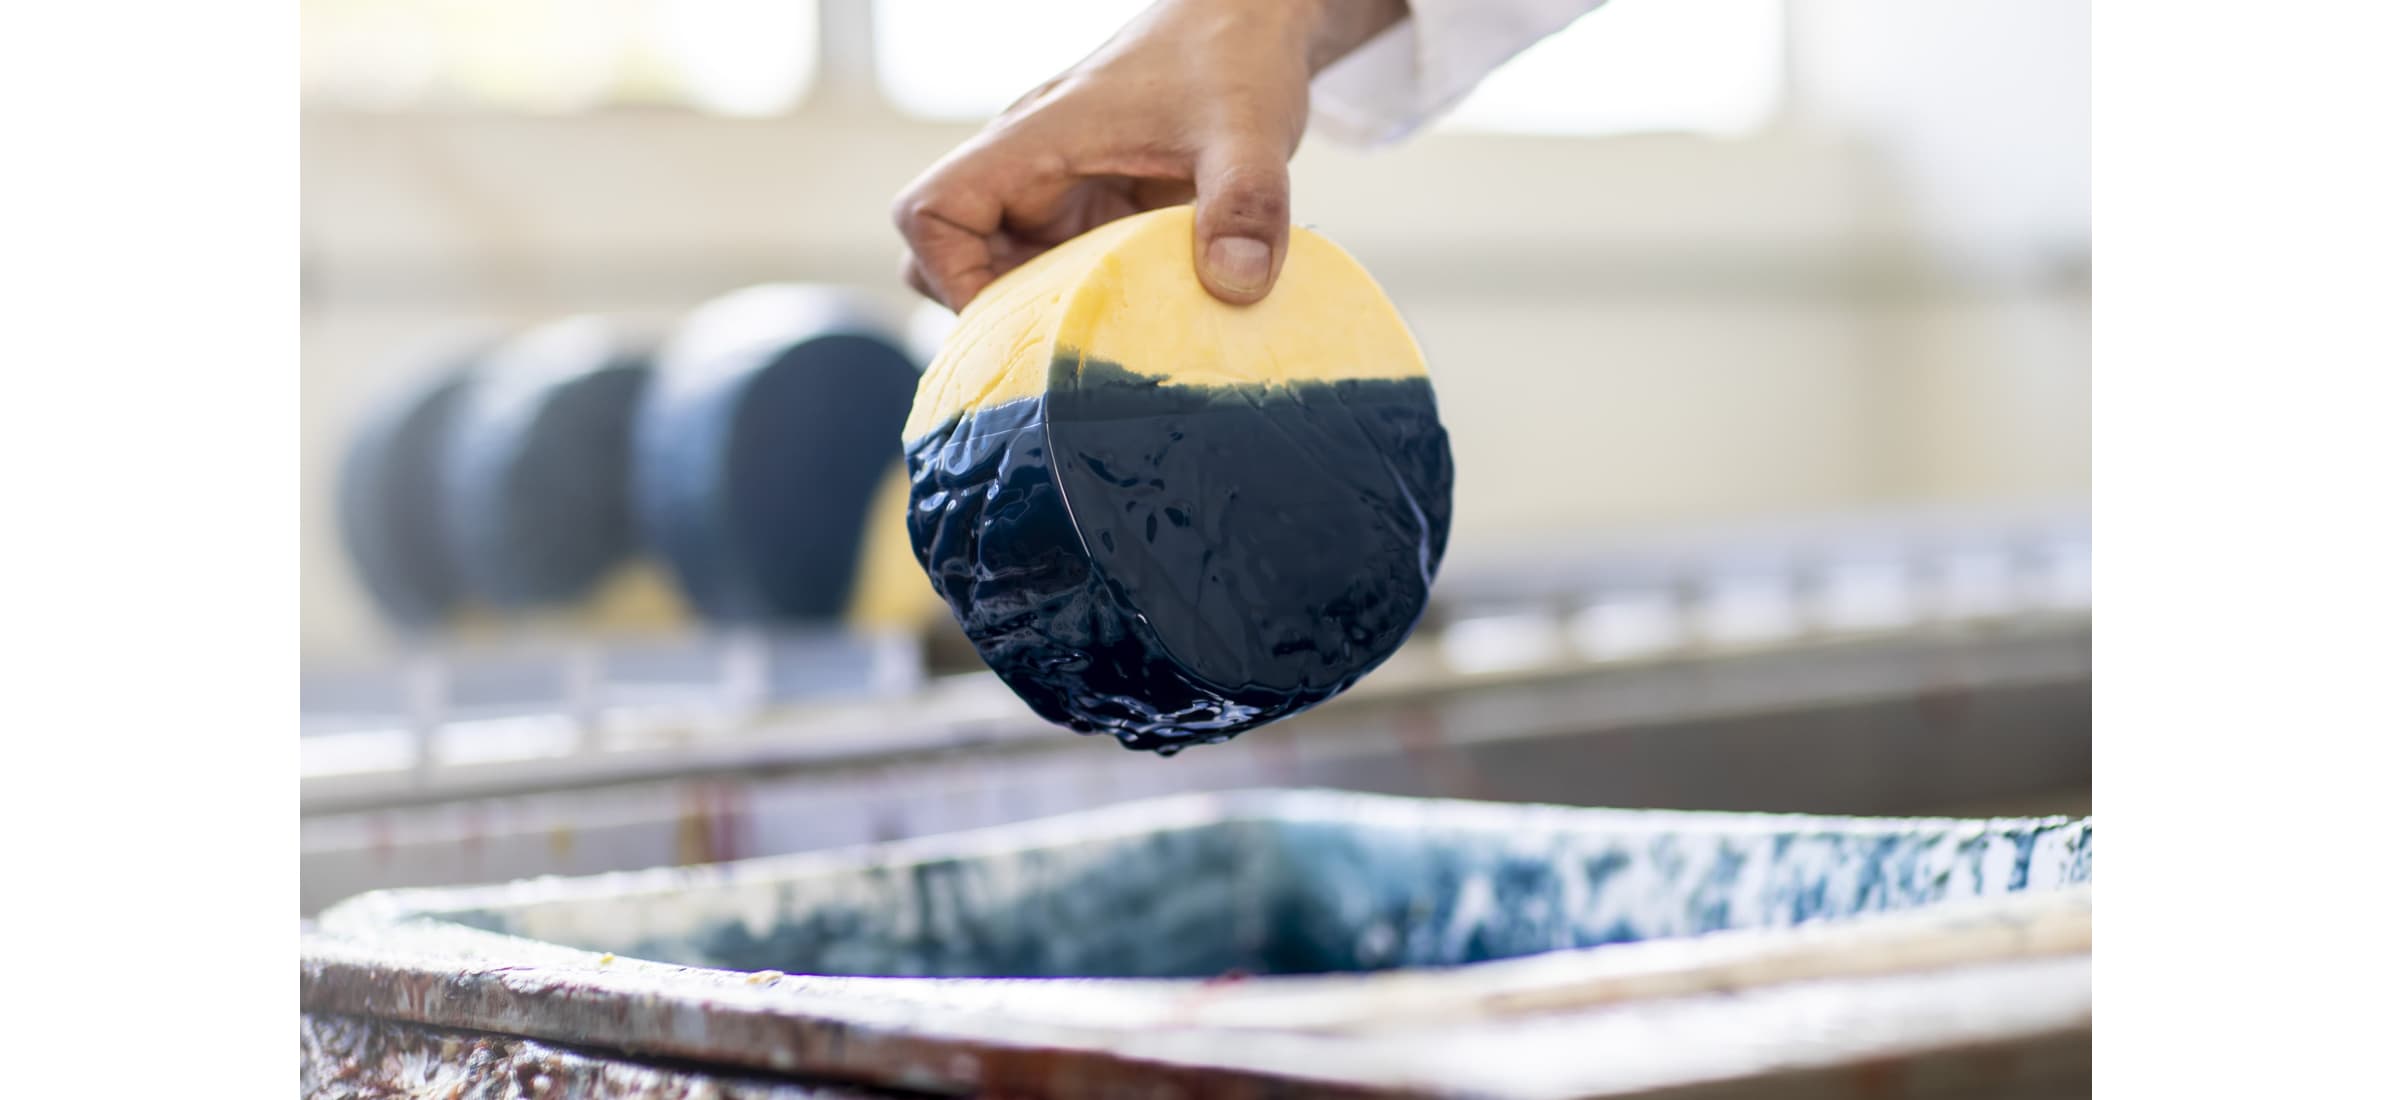 A hand dips a circular cheese block into blue wax.